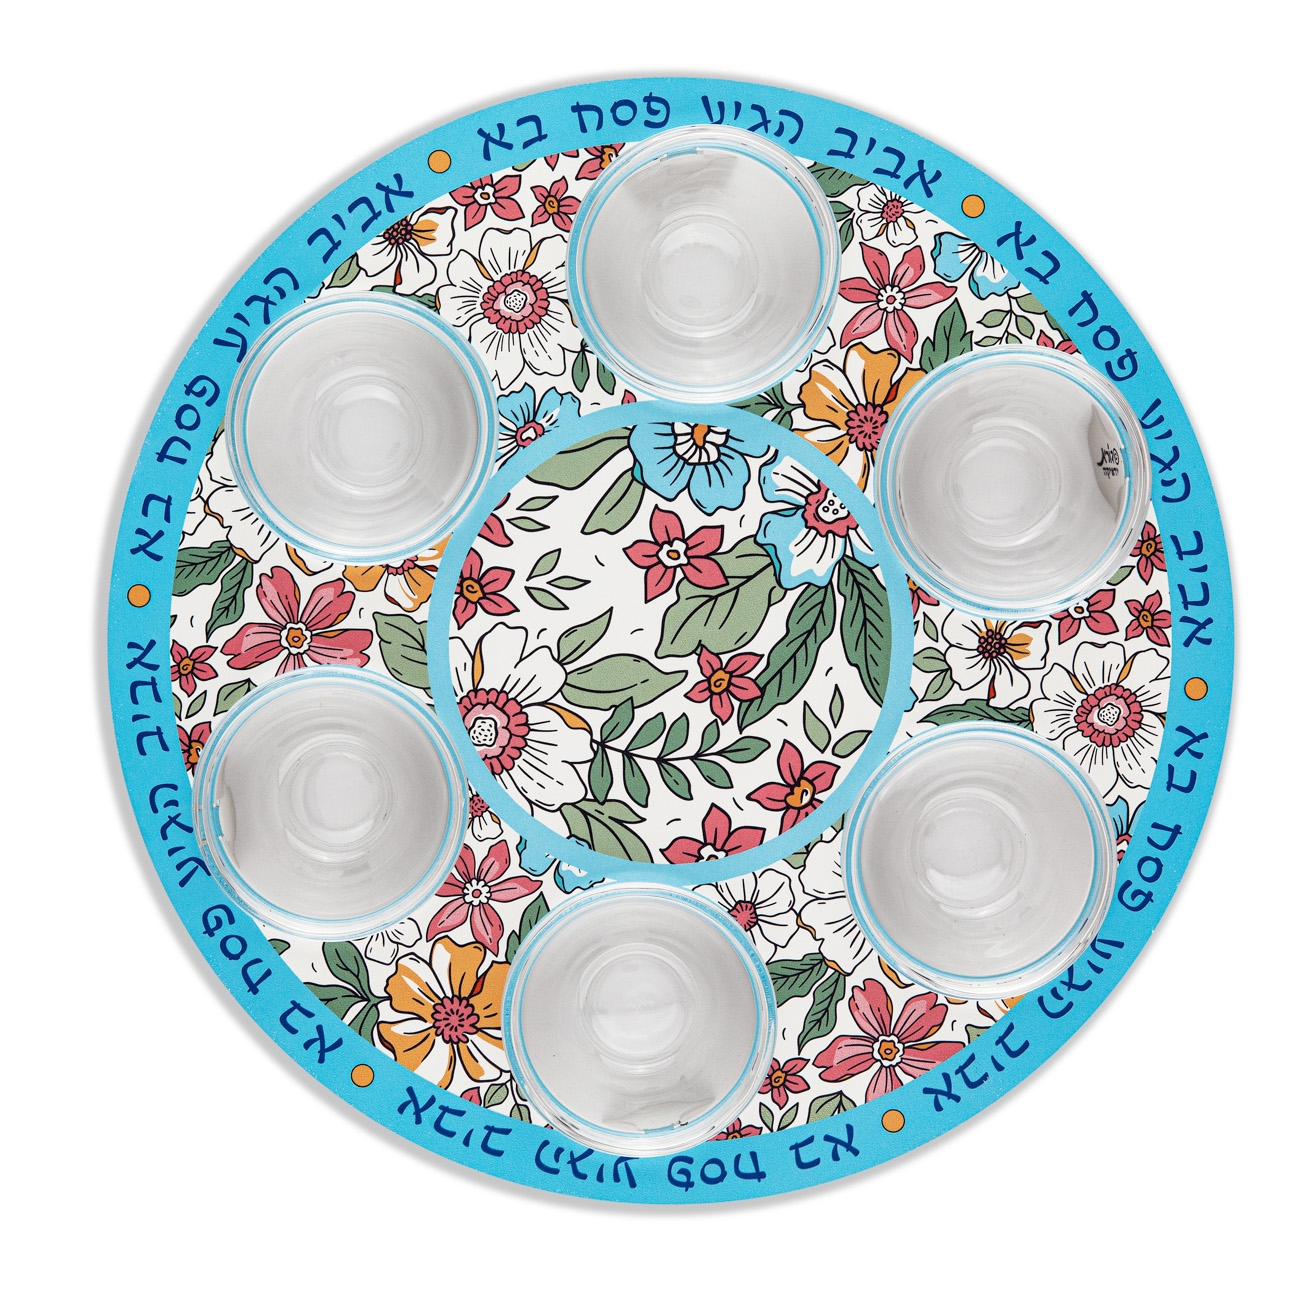 Passover Seder Plate With Flower Design By Dorit Judaica - 1